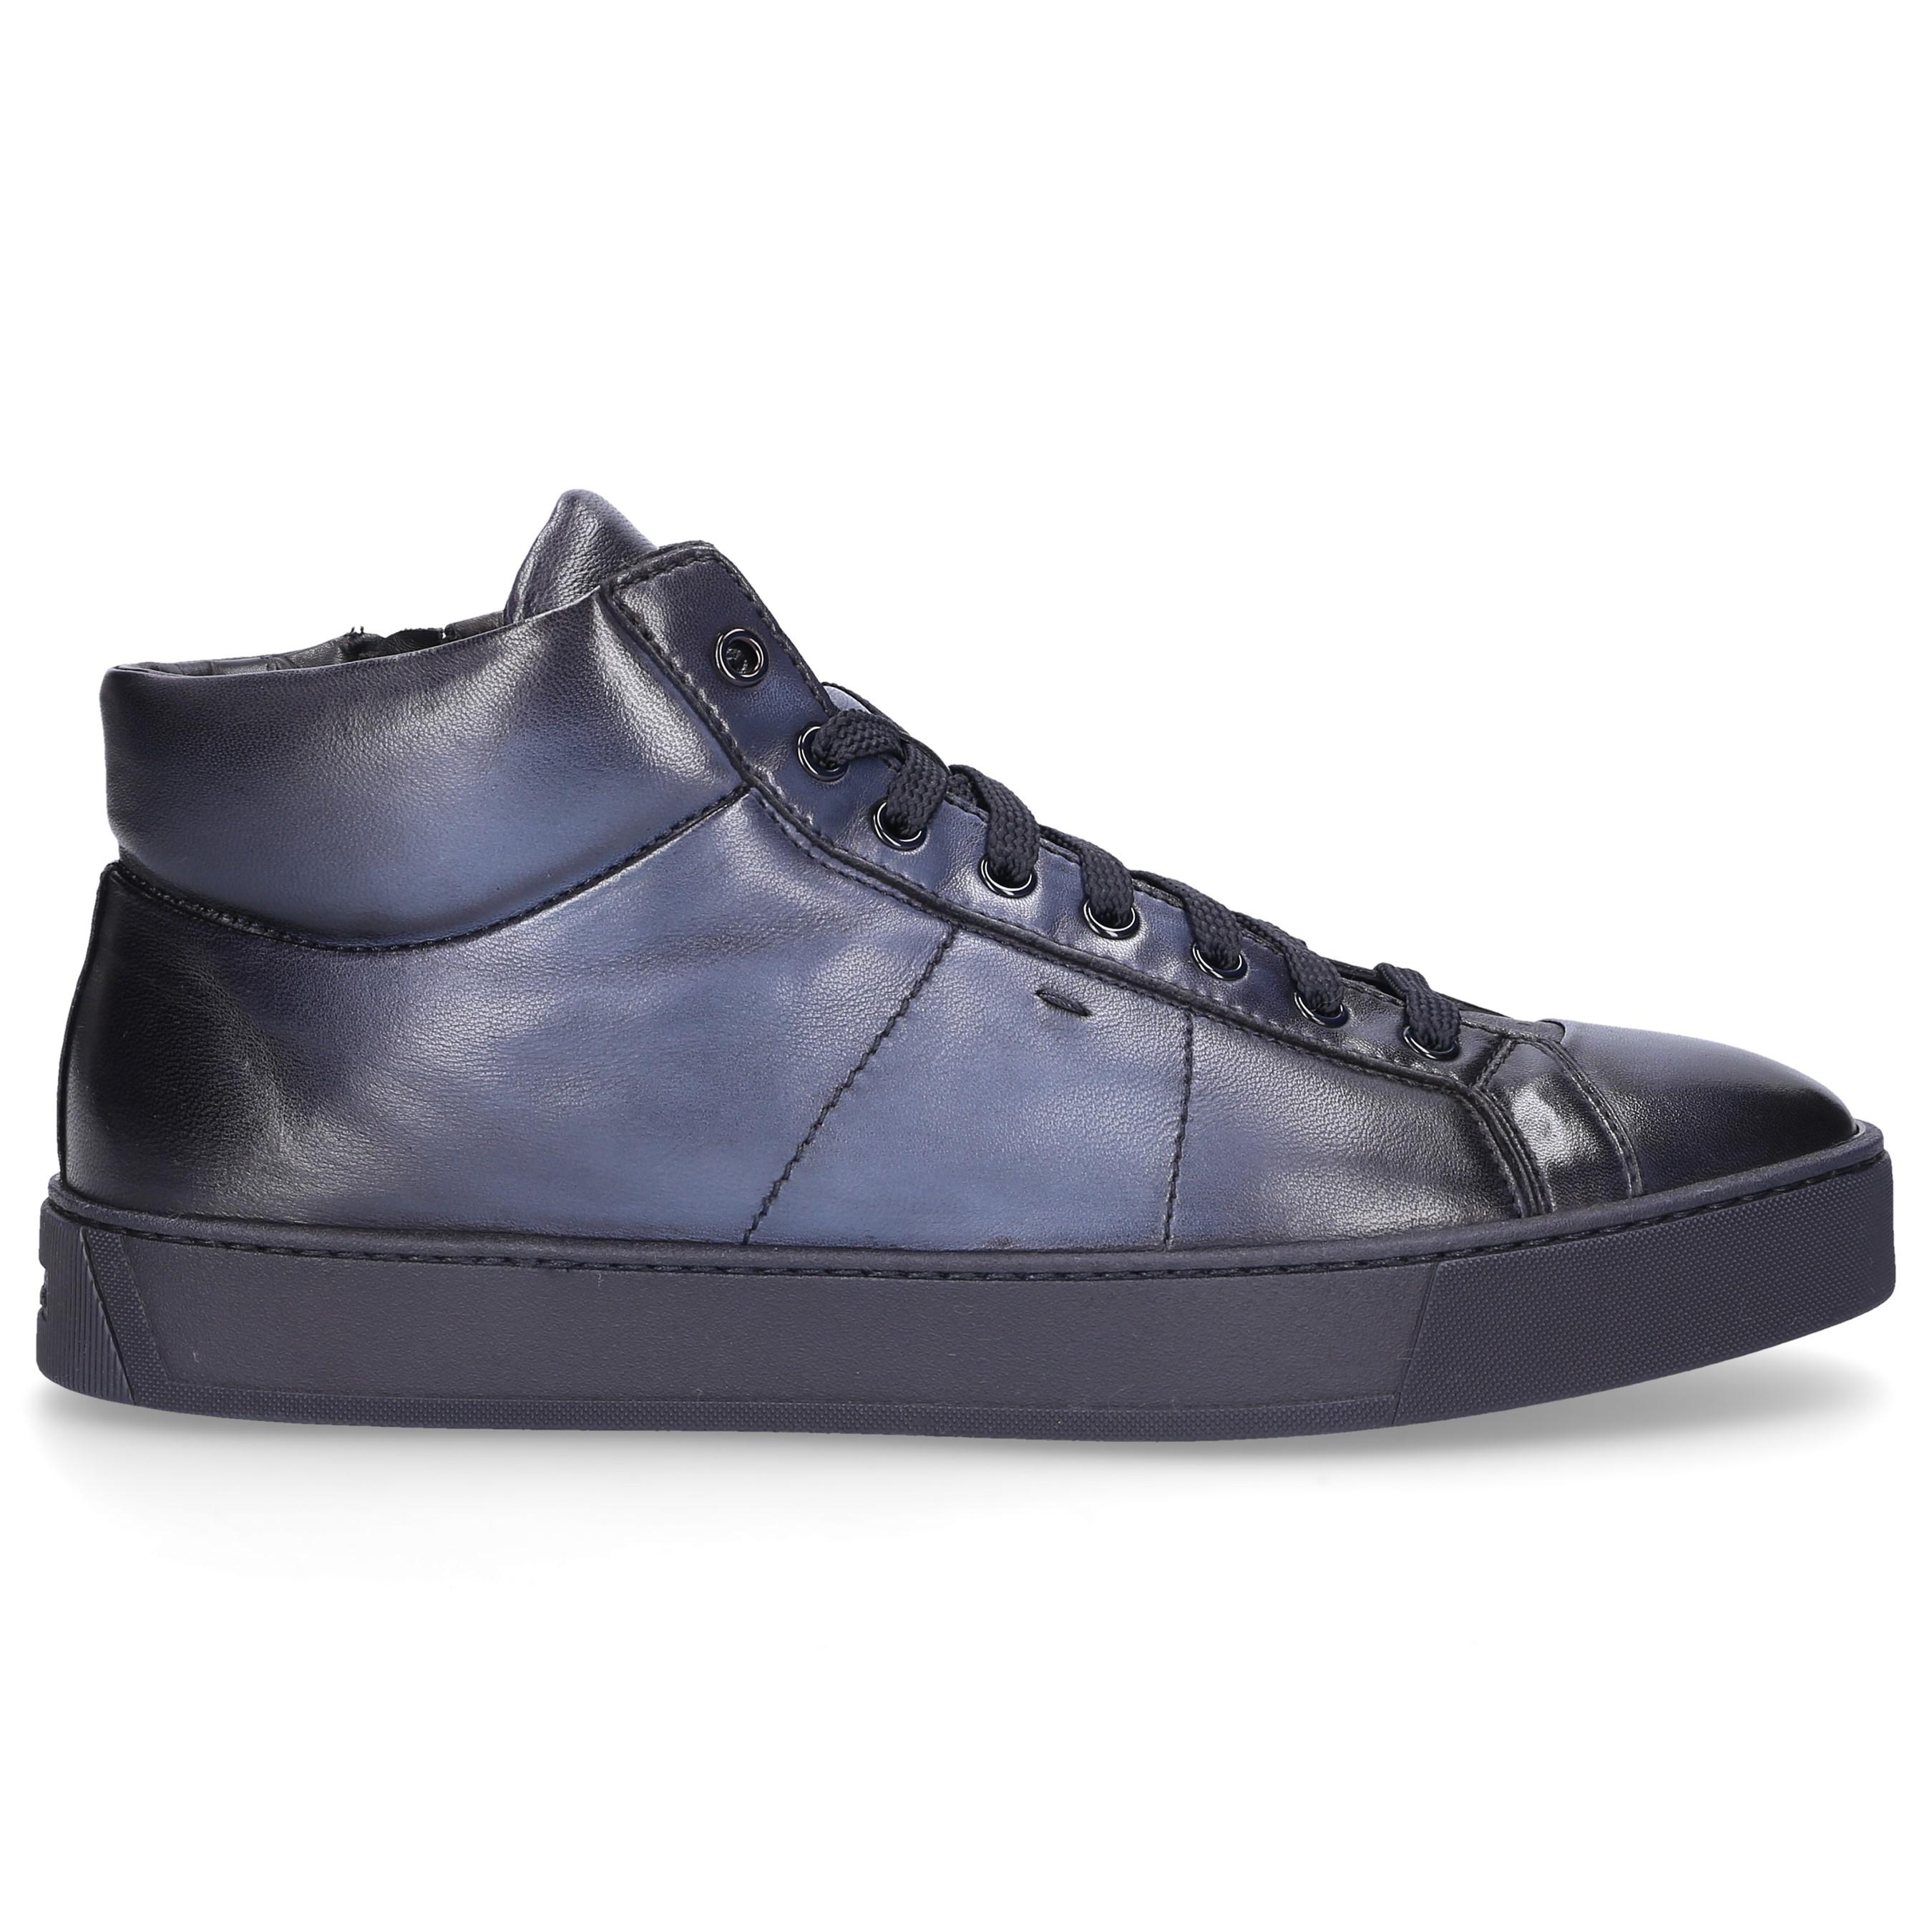 Santoni Leather Sneakers Blue 20851 for Men - Lyst